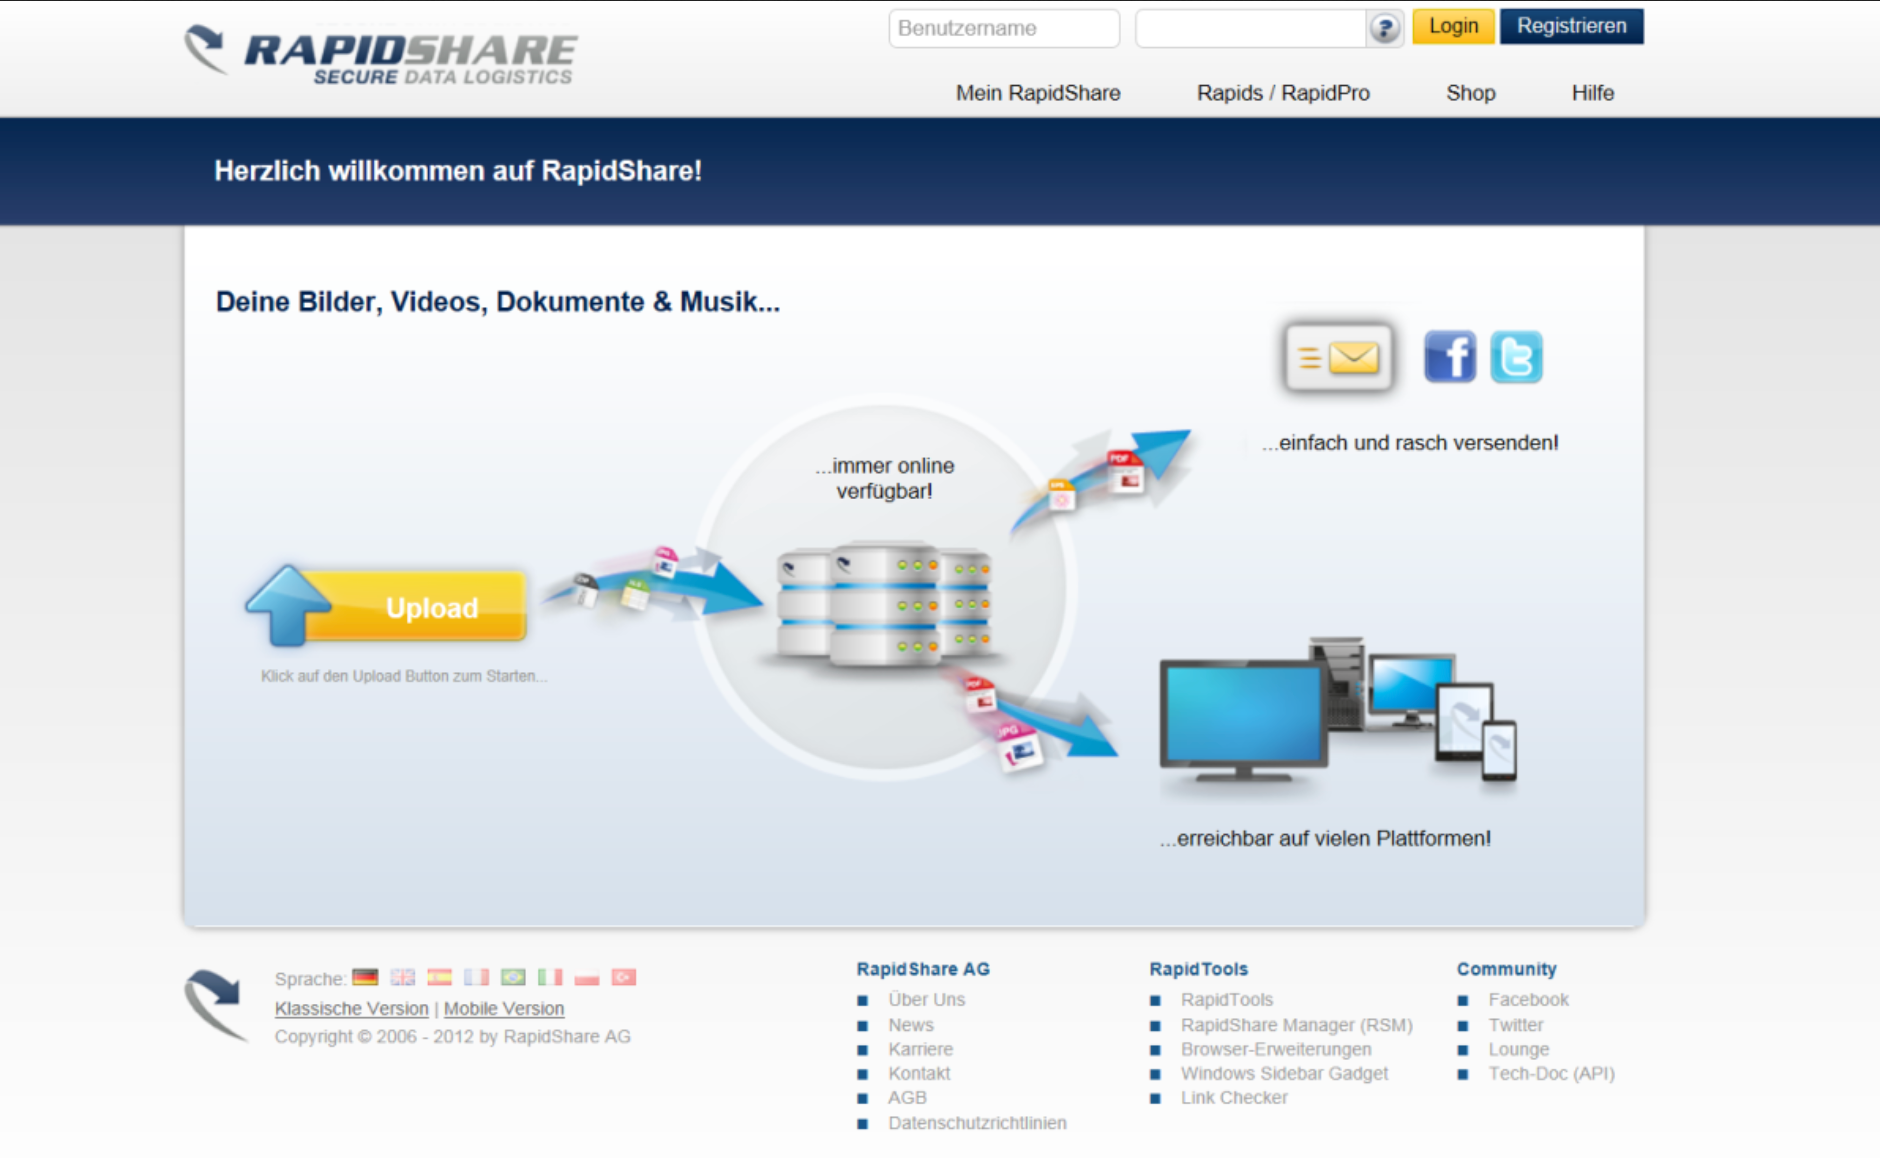 A screenshot of the Rapidshare Website in 2012